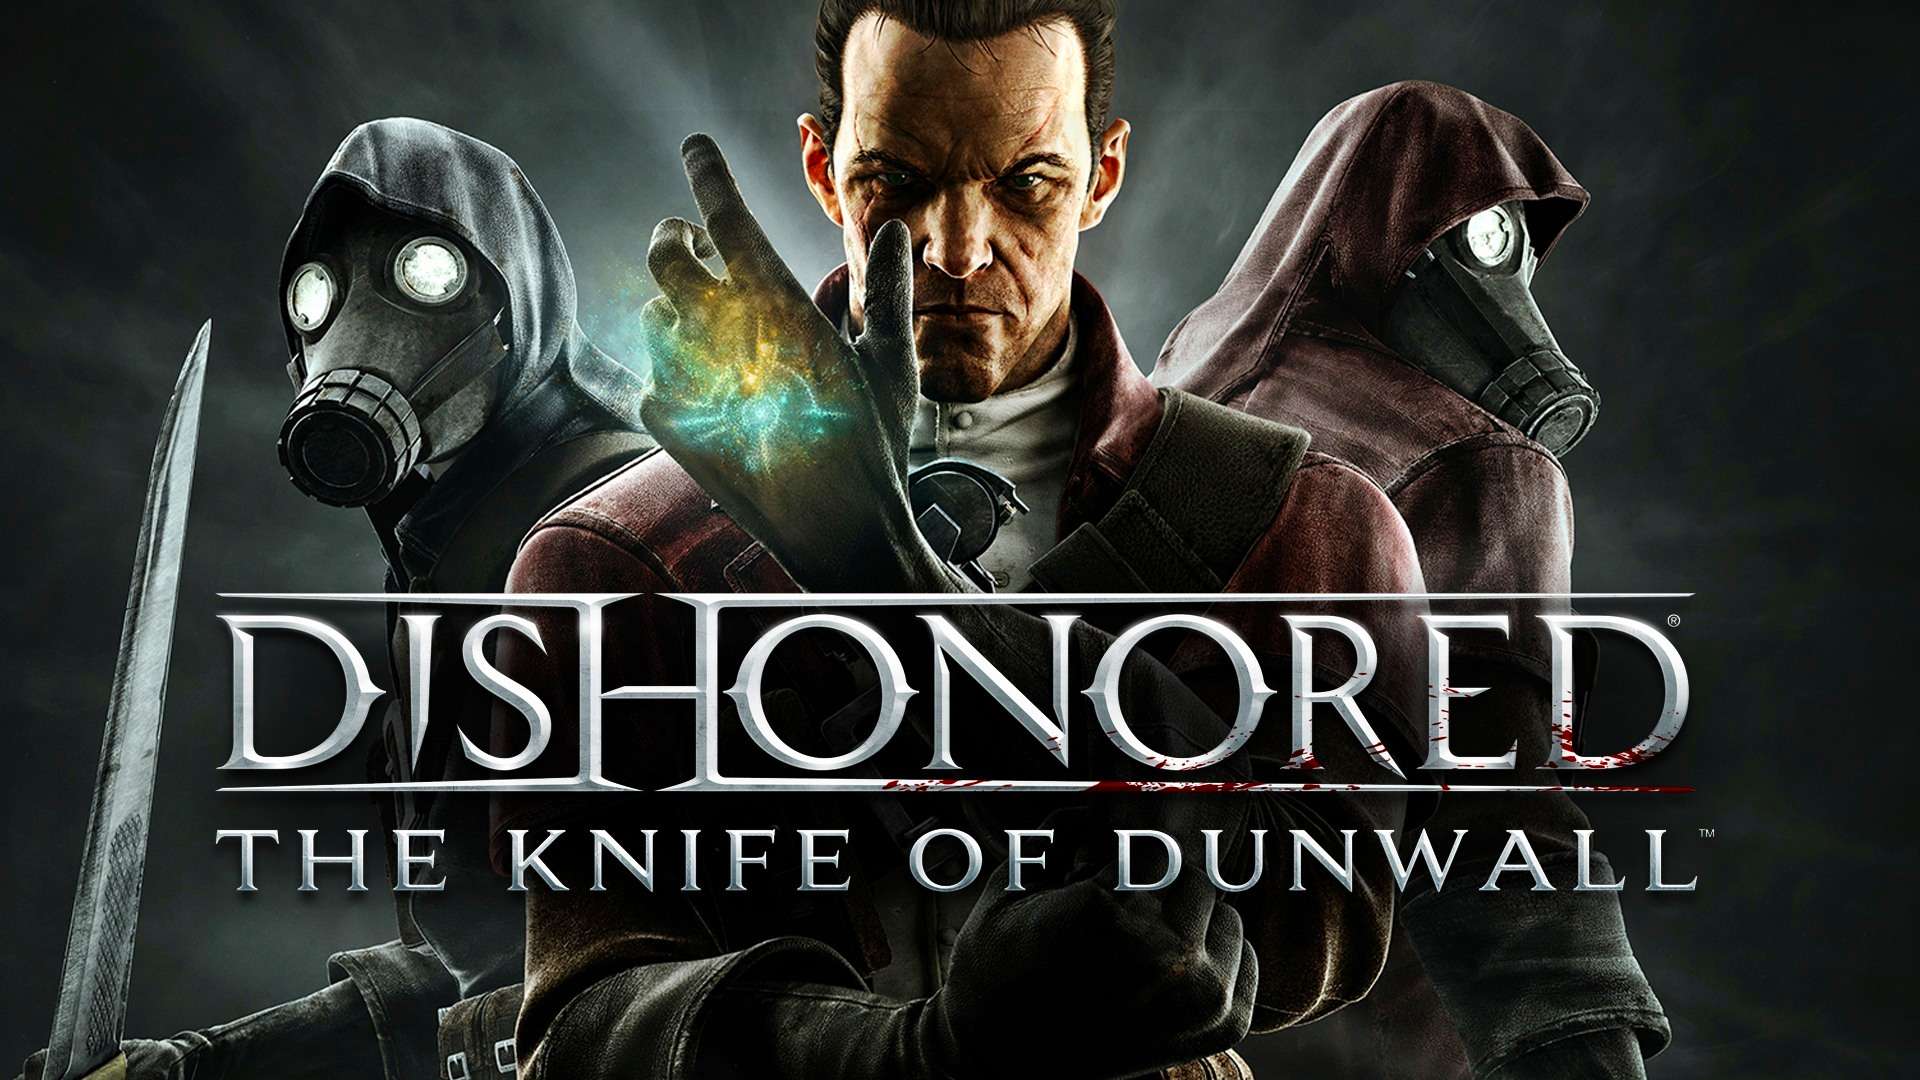 Pc ゲーム Dishonored Dlc The Knife Of Dunwall ナイフ オブ ダンウォール の字幕を日本語で表示する方法 Awgs Foundry